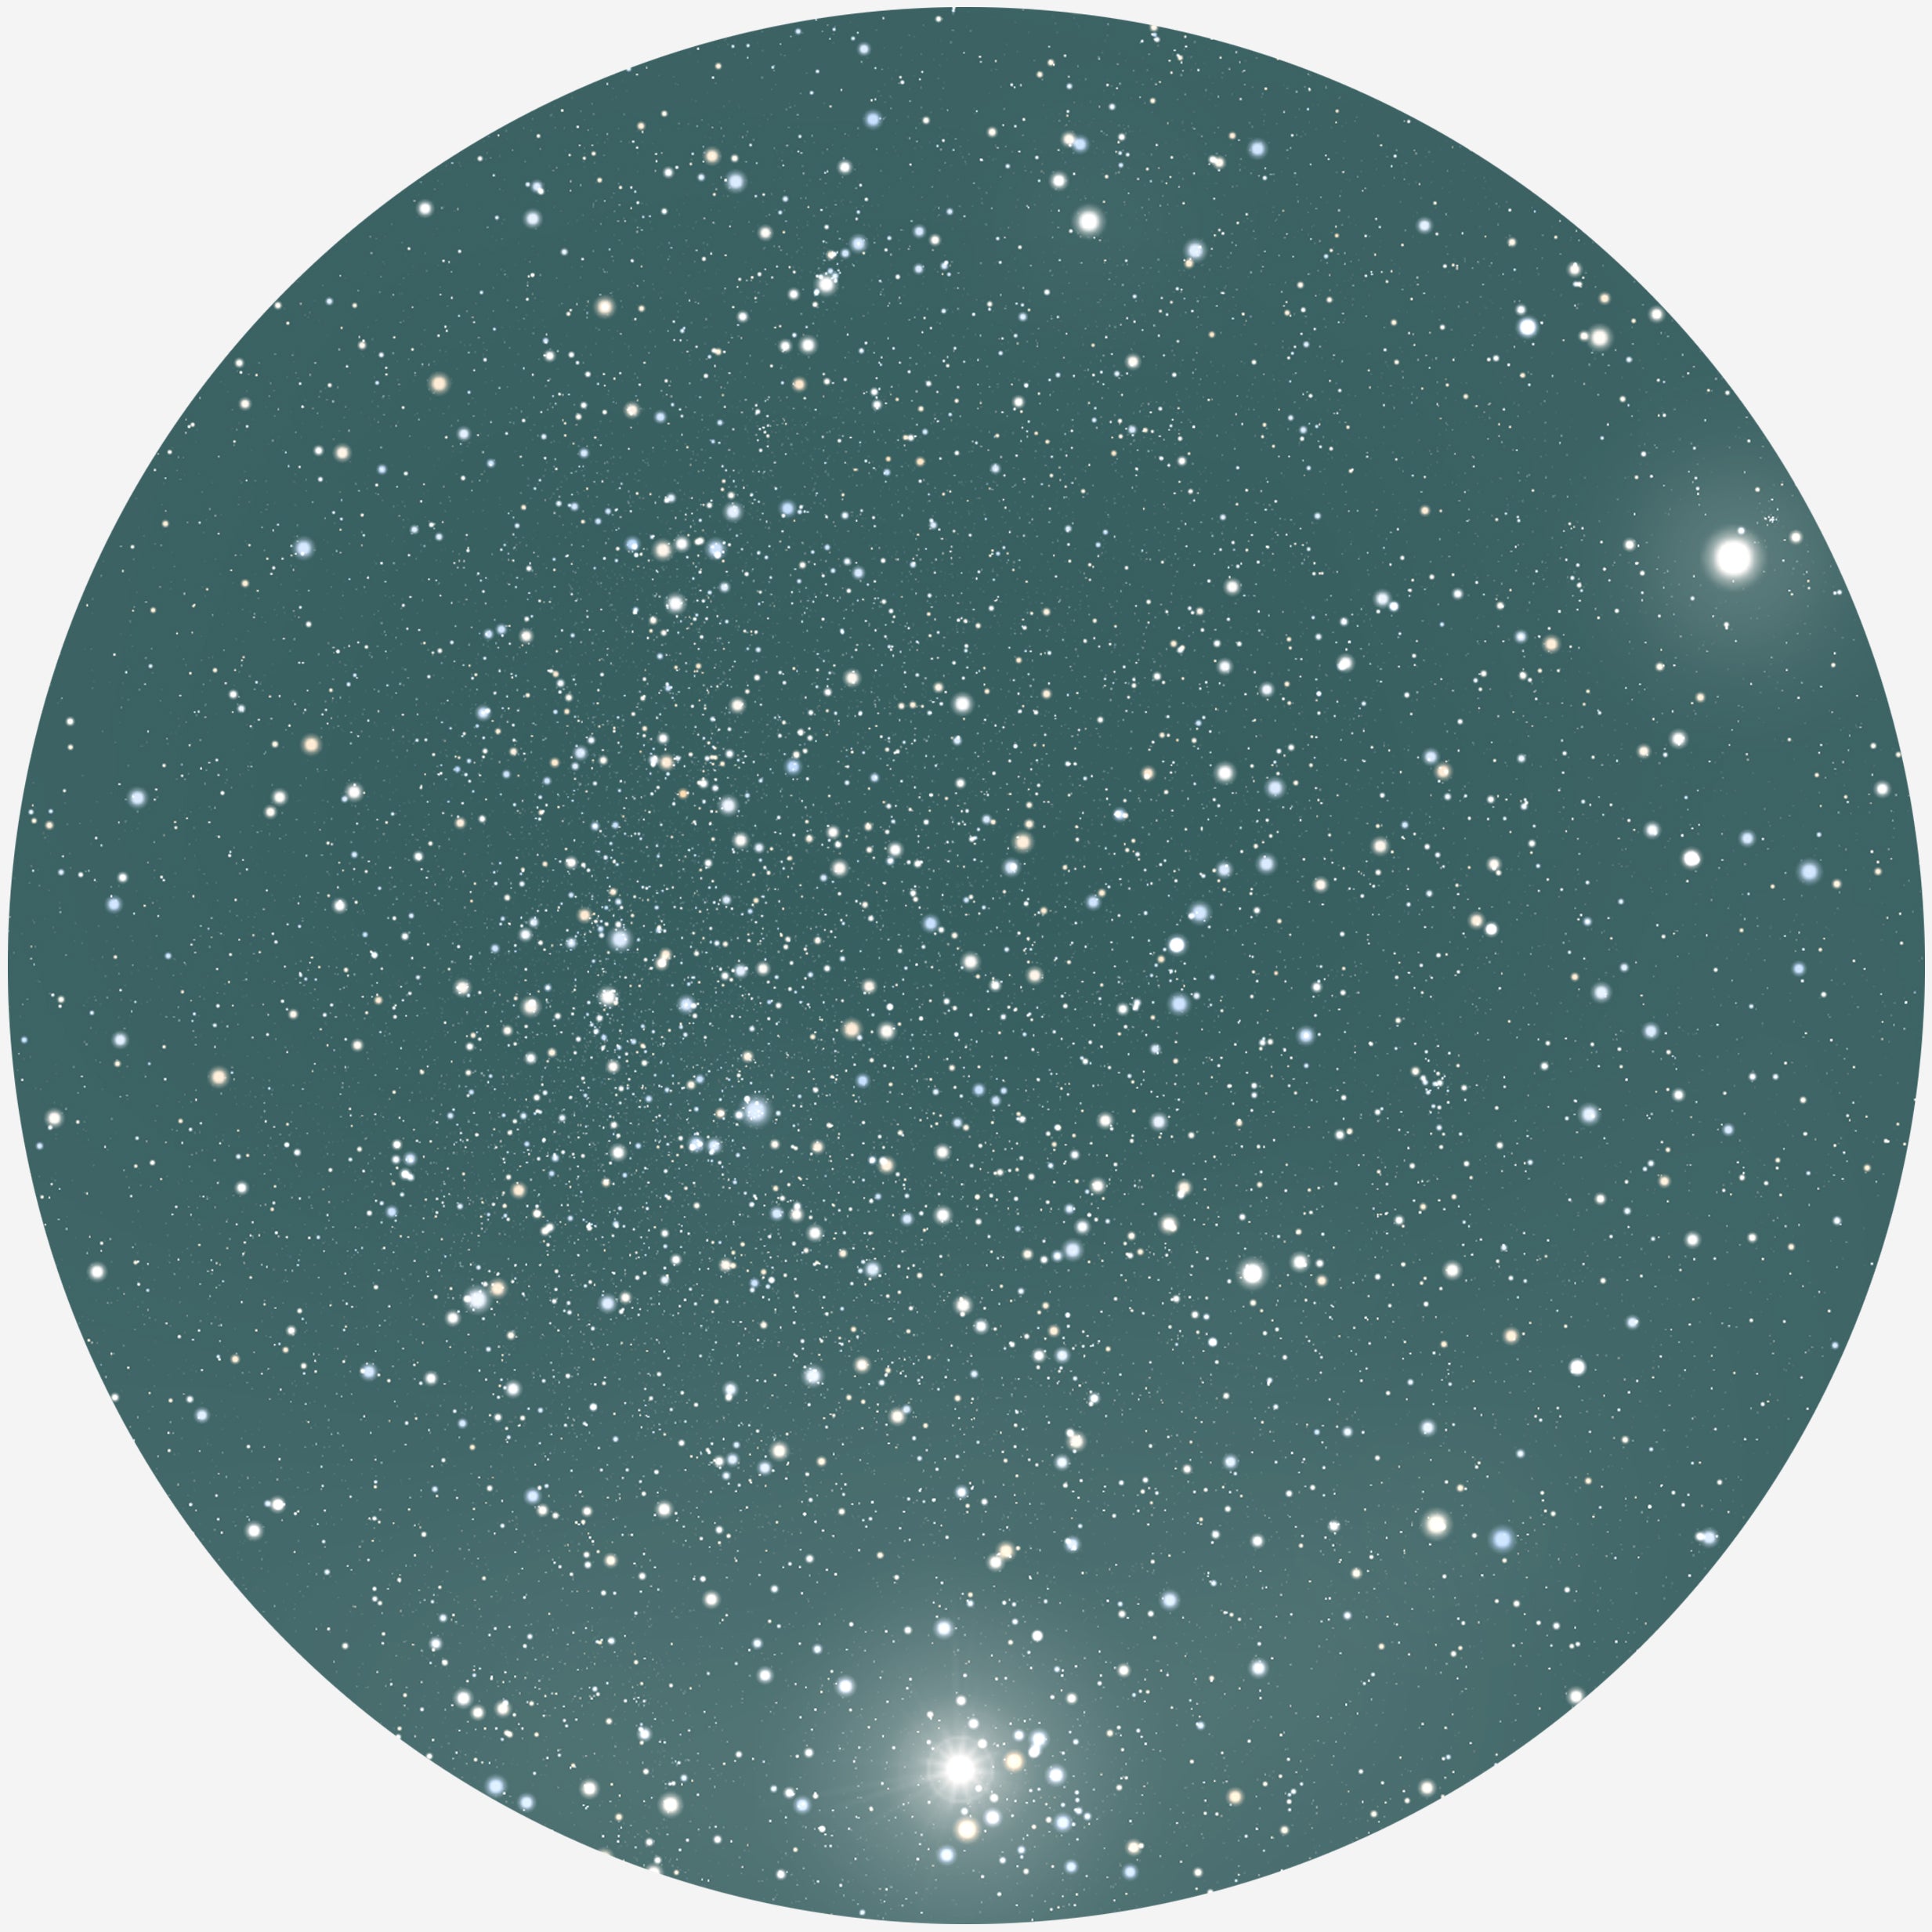 Se RUND PLAKAT MED PERSONLIG STJERNEHIMMEL (MØRKEGRØN) - 30 cm / Klar stjernehimmel hos KISPUS